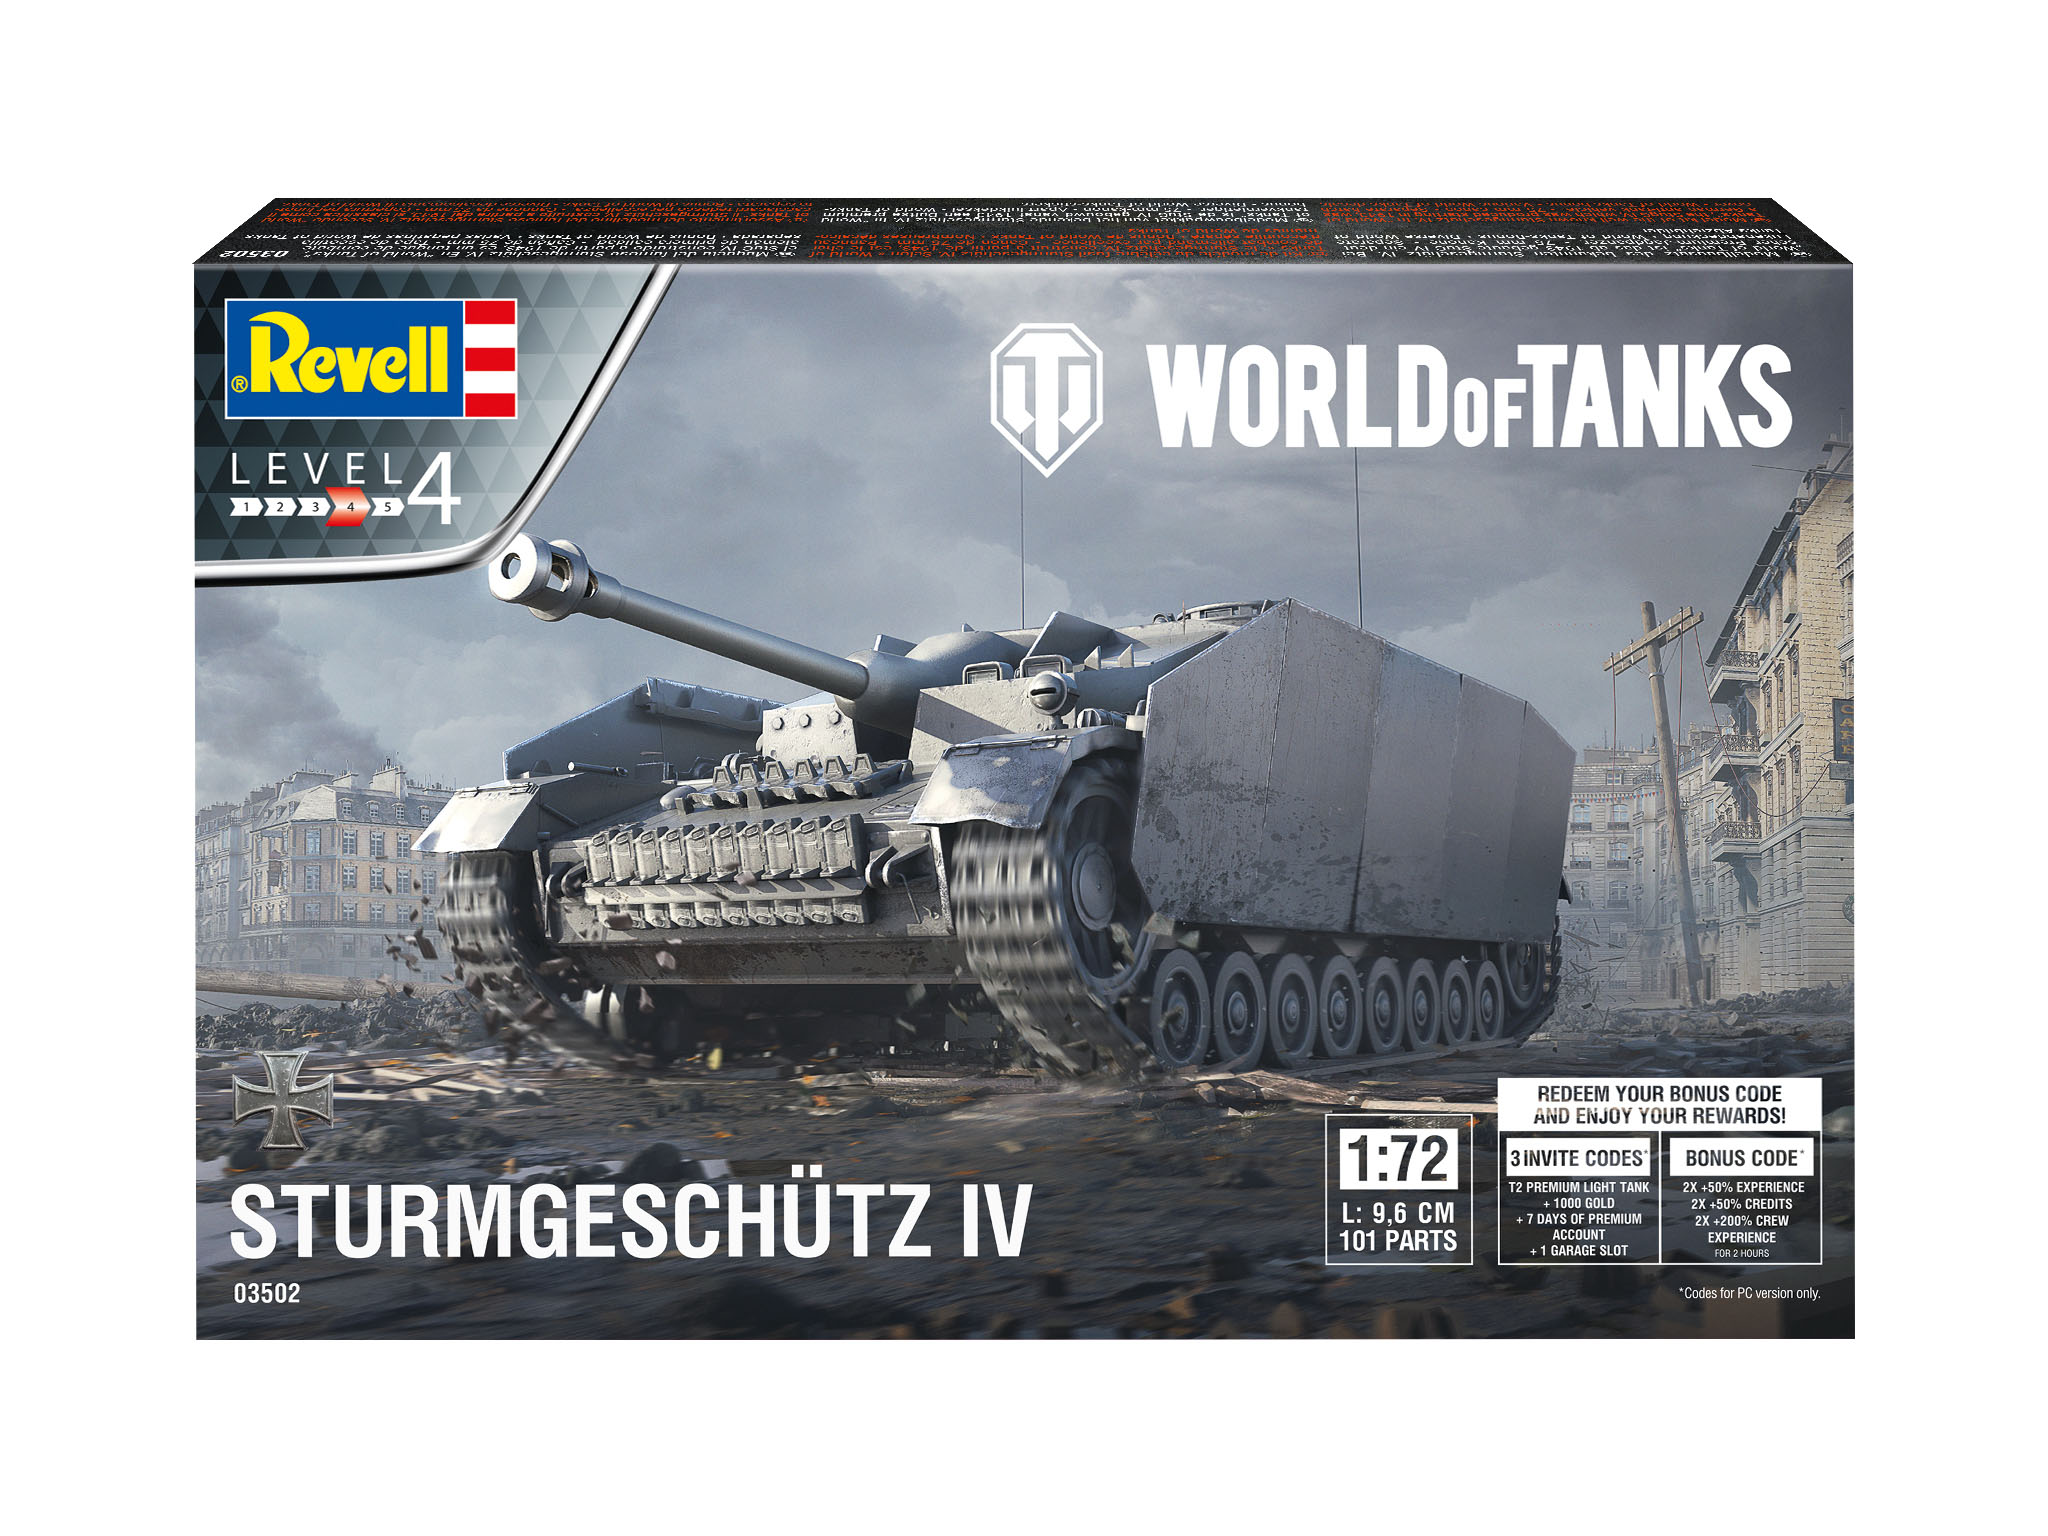 Sturmgeschütz IV "World of Ta - Sturmgeschütz IV World of Tanks